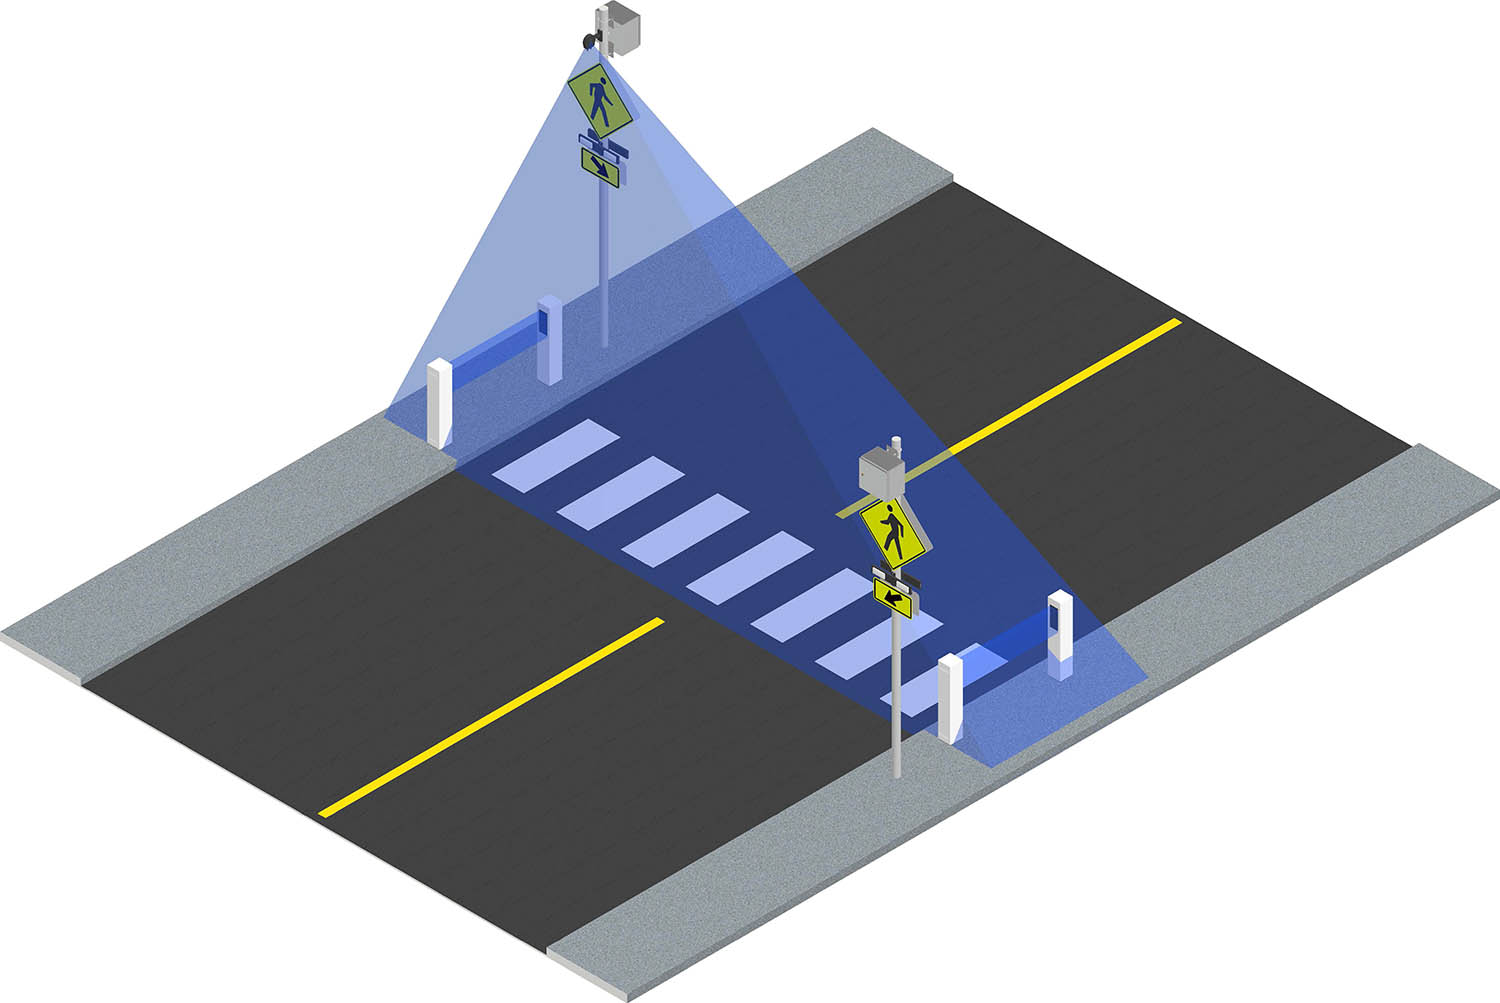 Illustration of a thermal sensor and set of photobollards for crosswalk warning systems activation